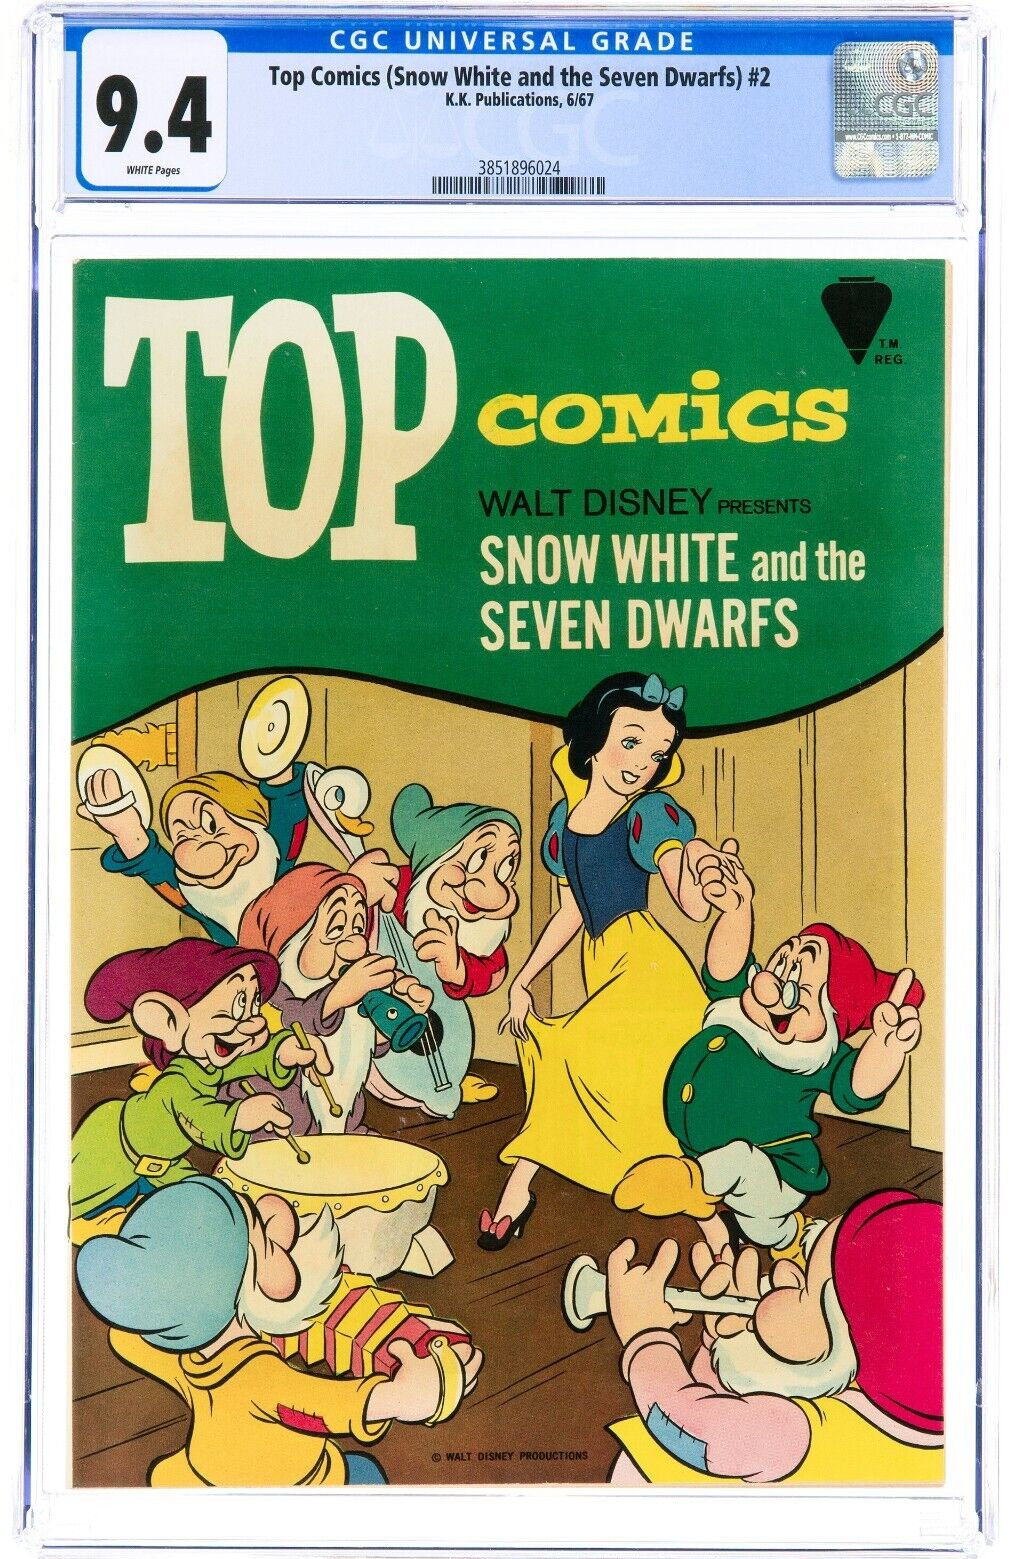 Top Comics #2 Snow White and Seven Dwarfs K. K. Publications, 1967 CGC 9.4 White